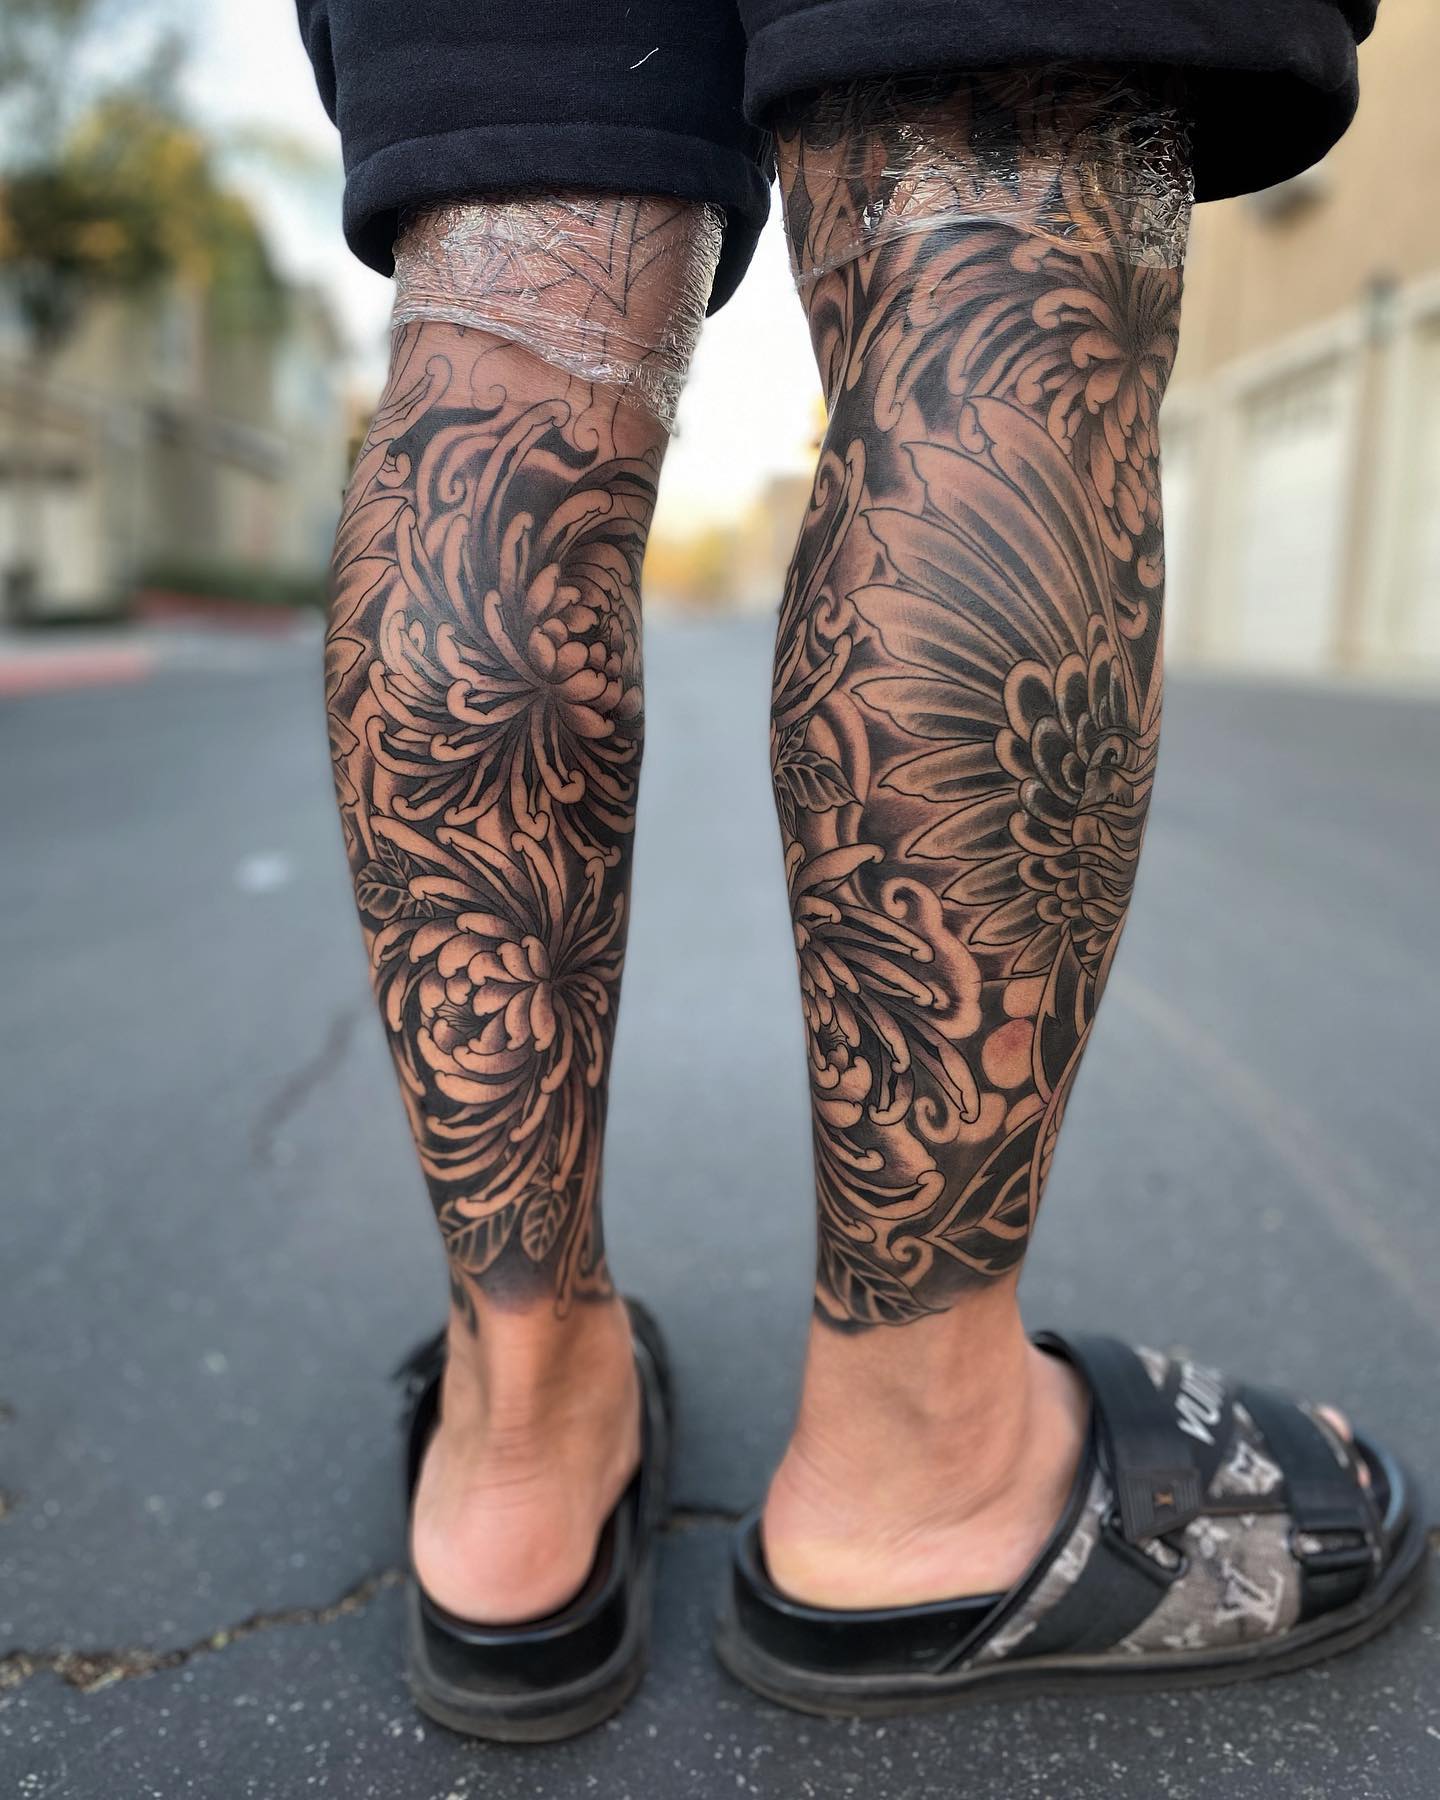 Male calf tattoos